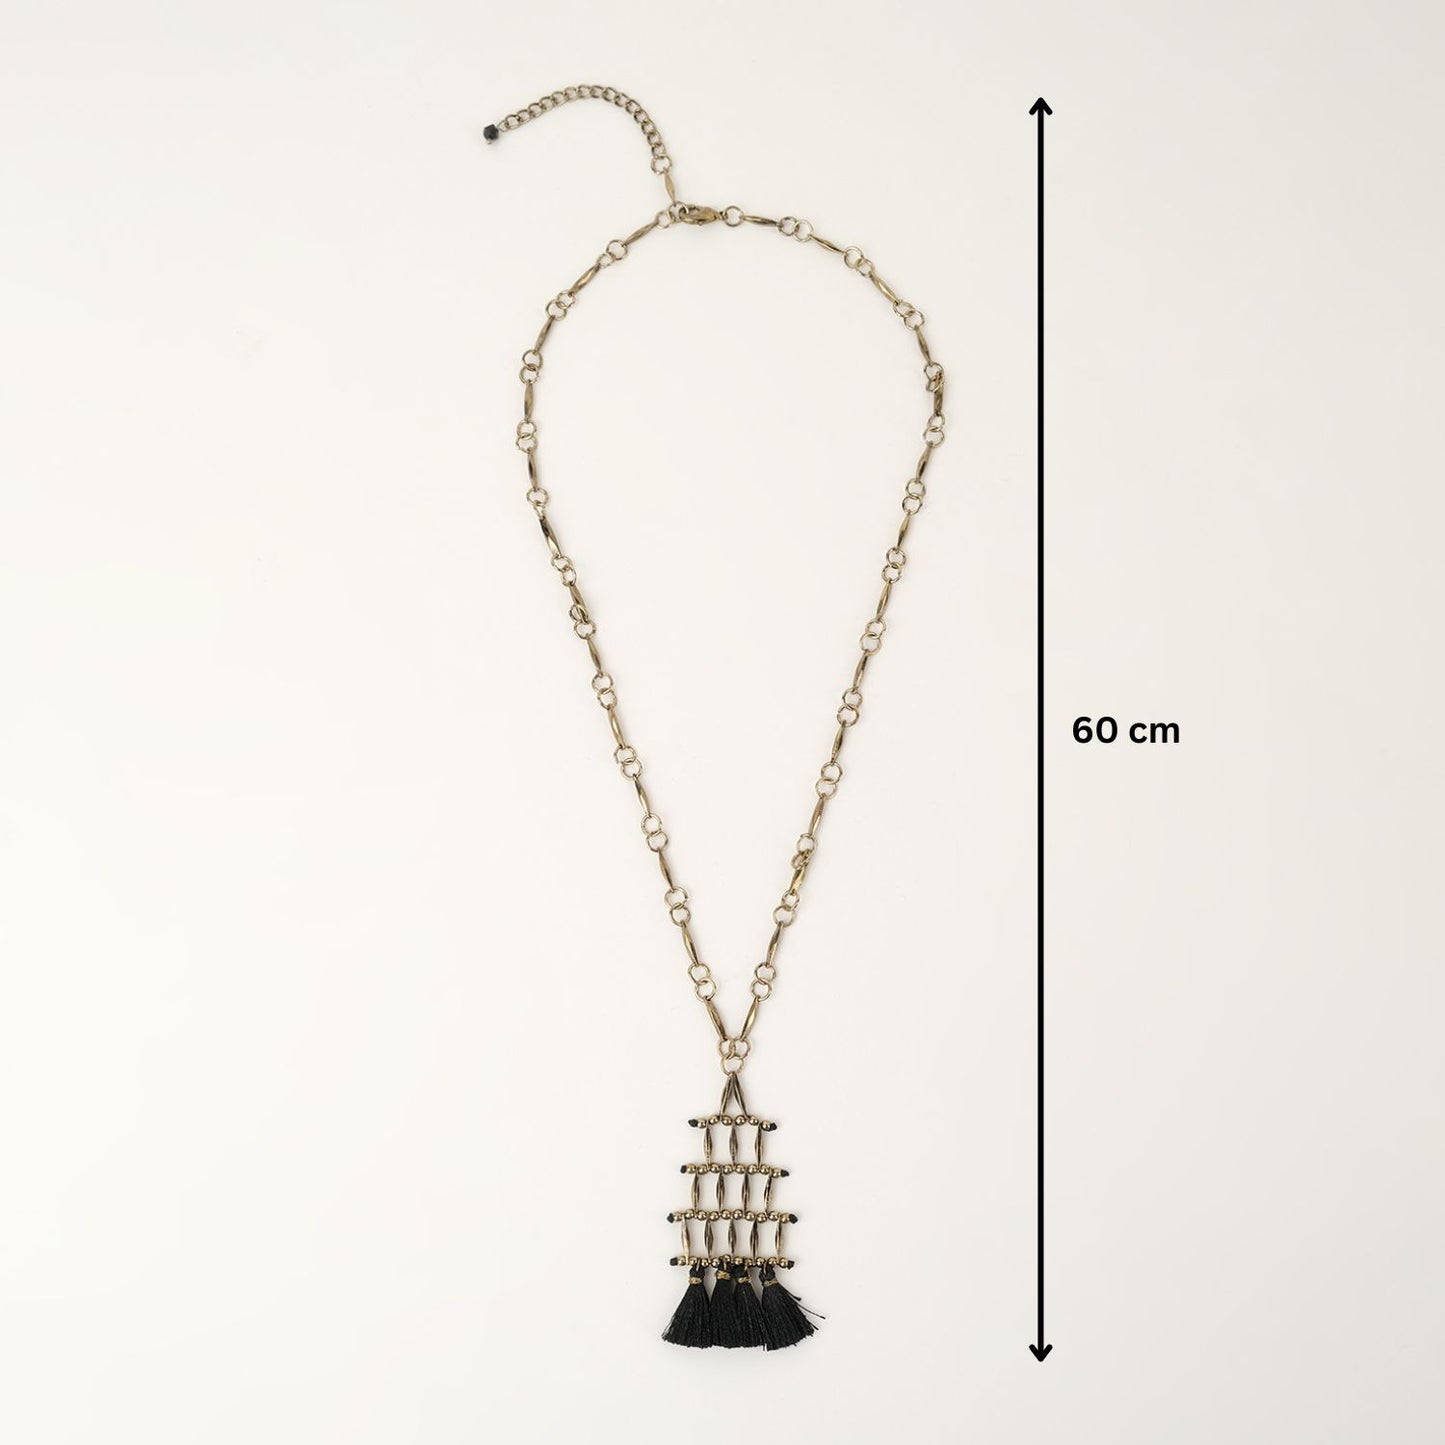 Antique Black Tassel Necklace